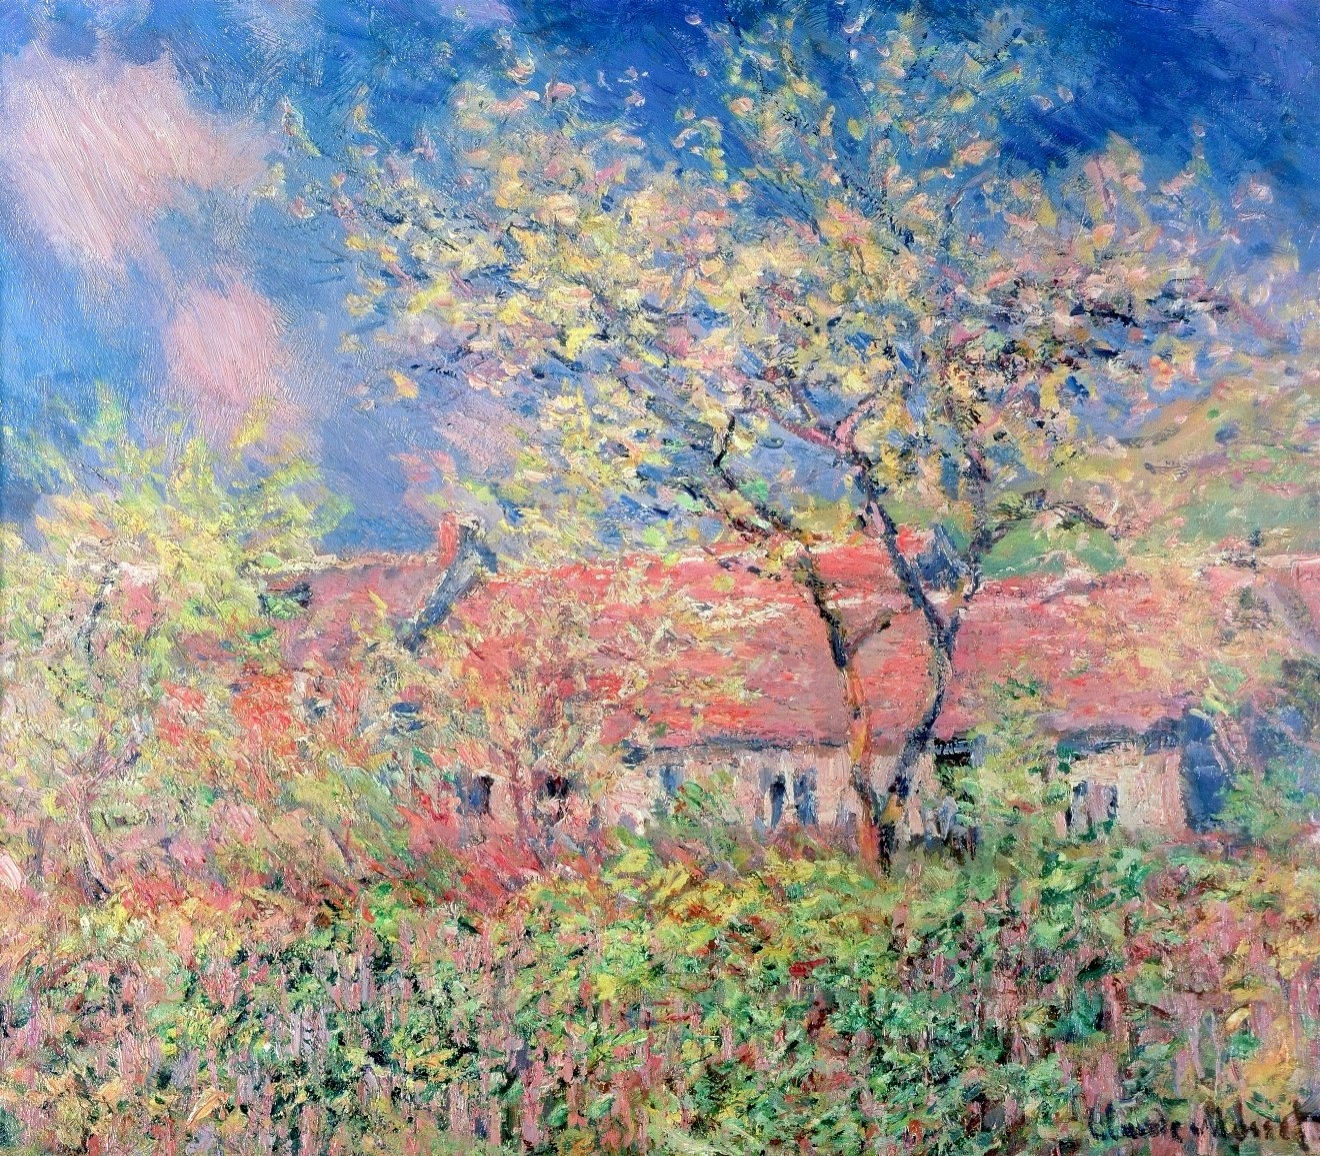 Claude+Monet-1840-1926 (851).jpg